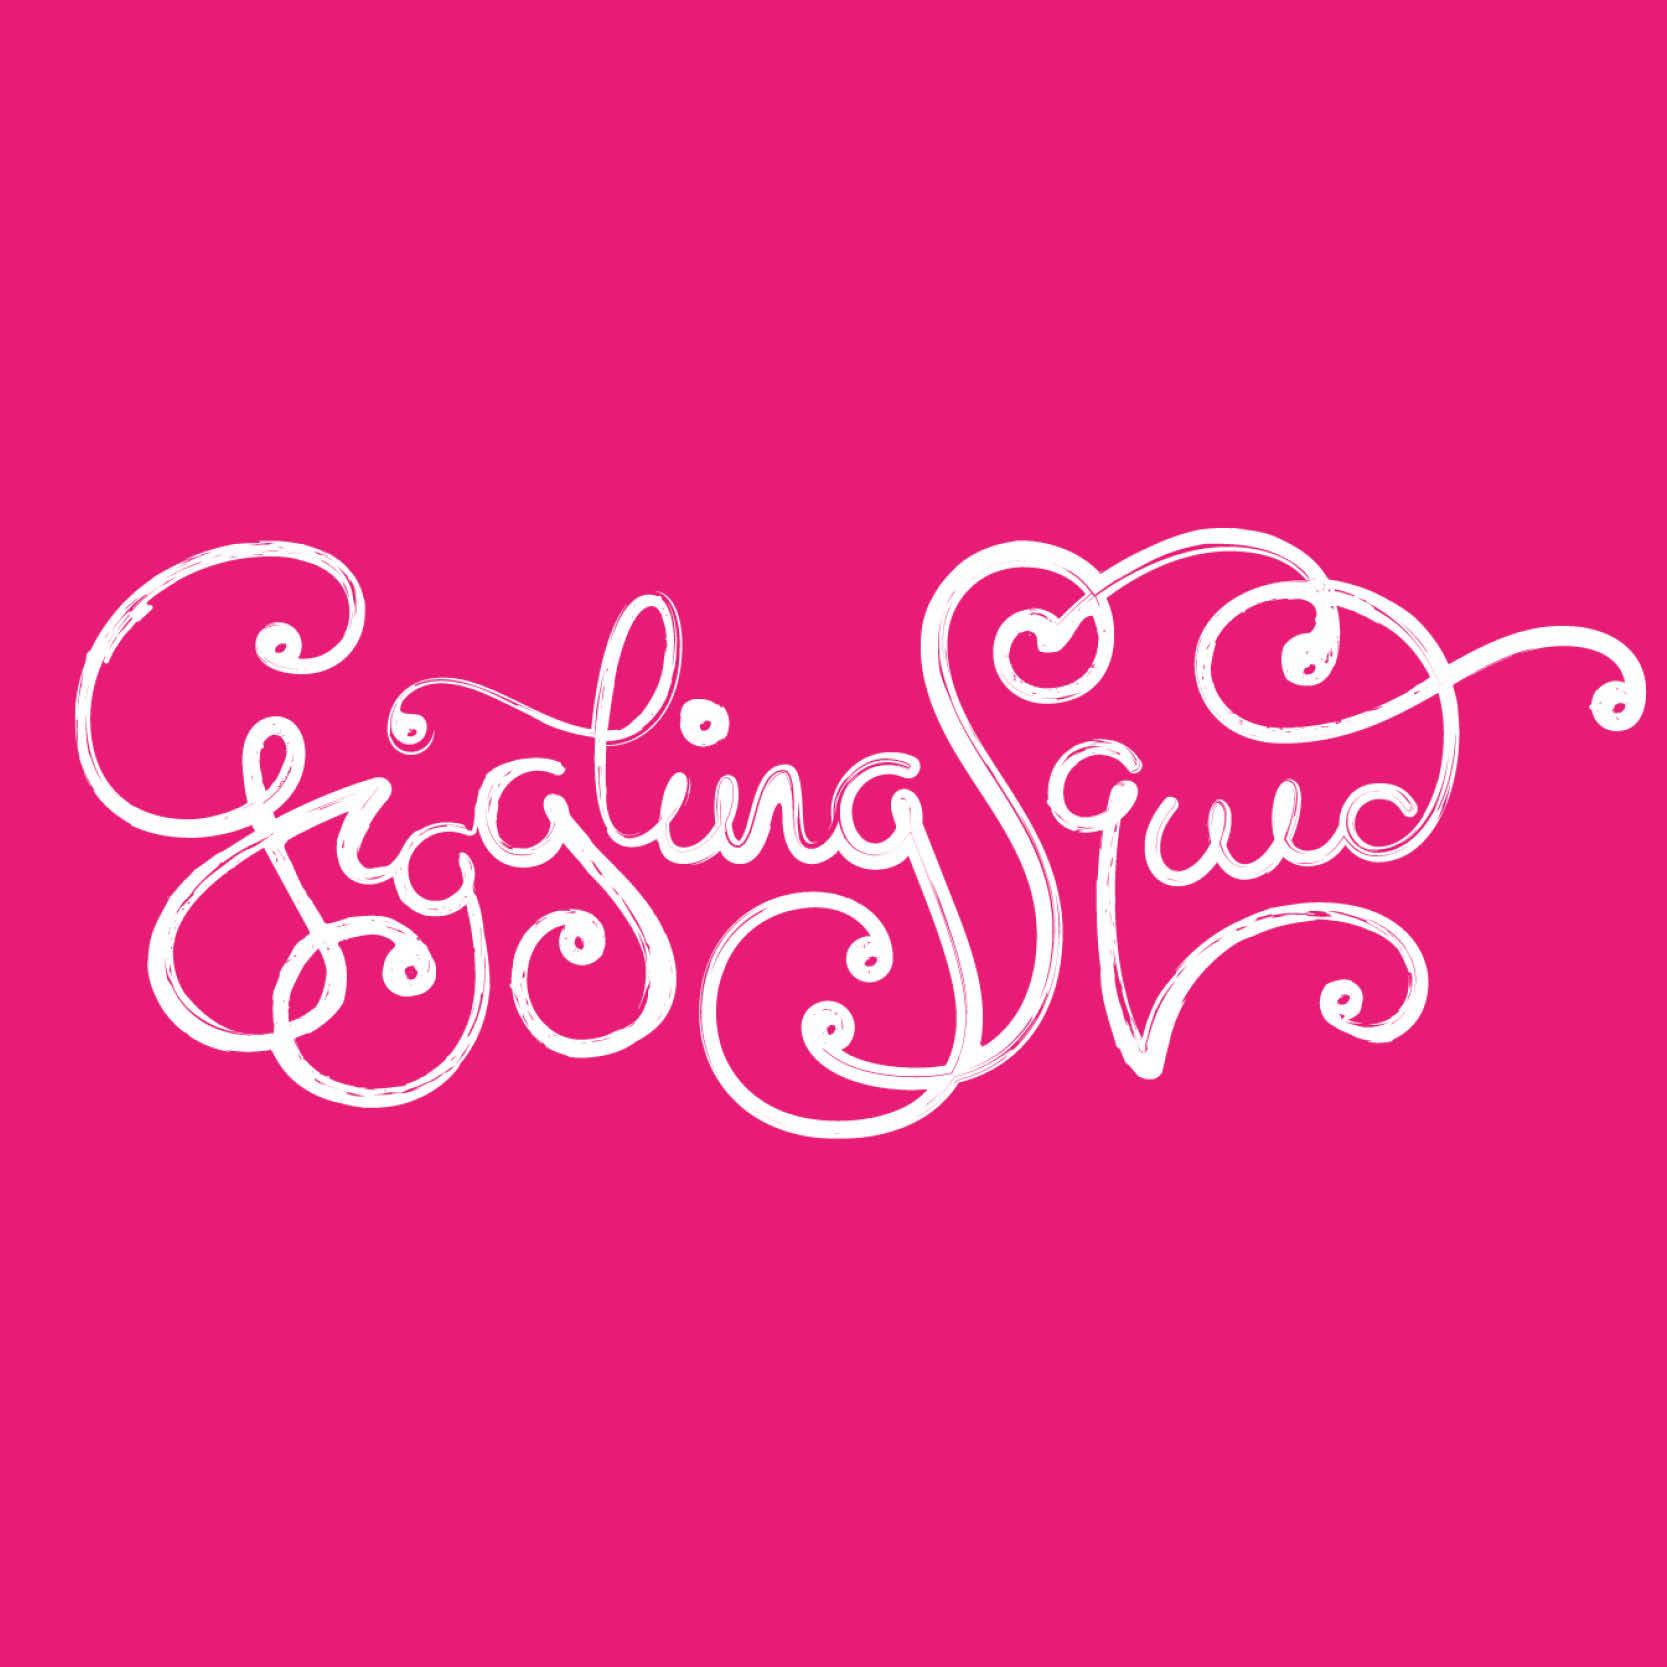 Giggling Squid logo Giggling Squid - Maidstone Maidstone 01622 948855